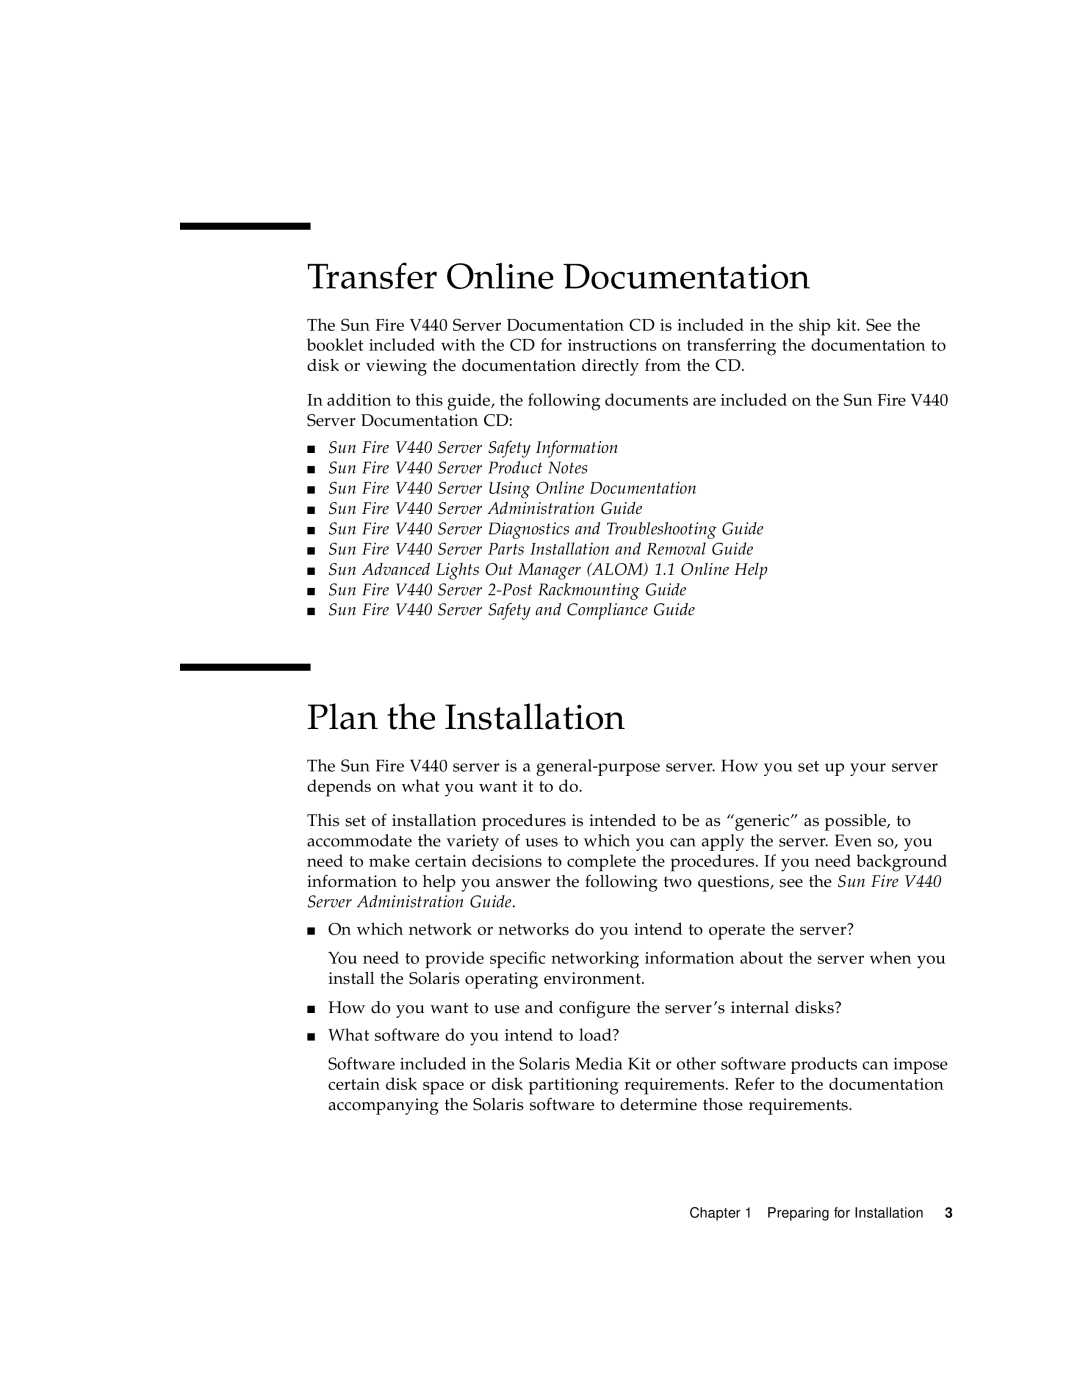 Sun Microsystems 816-7727-10 Transfer Online Documentation, Plan the Installation, Sun Fire V440 Server Safety Information 